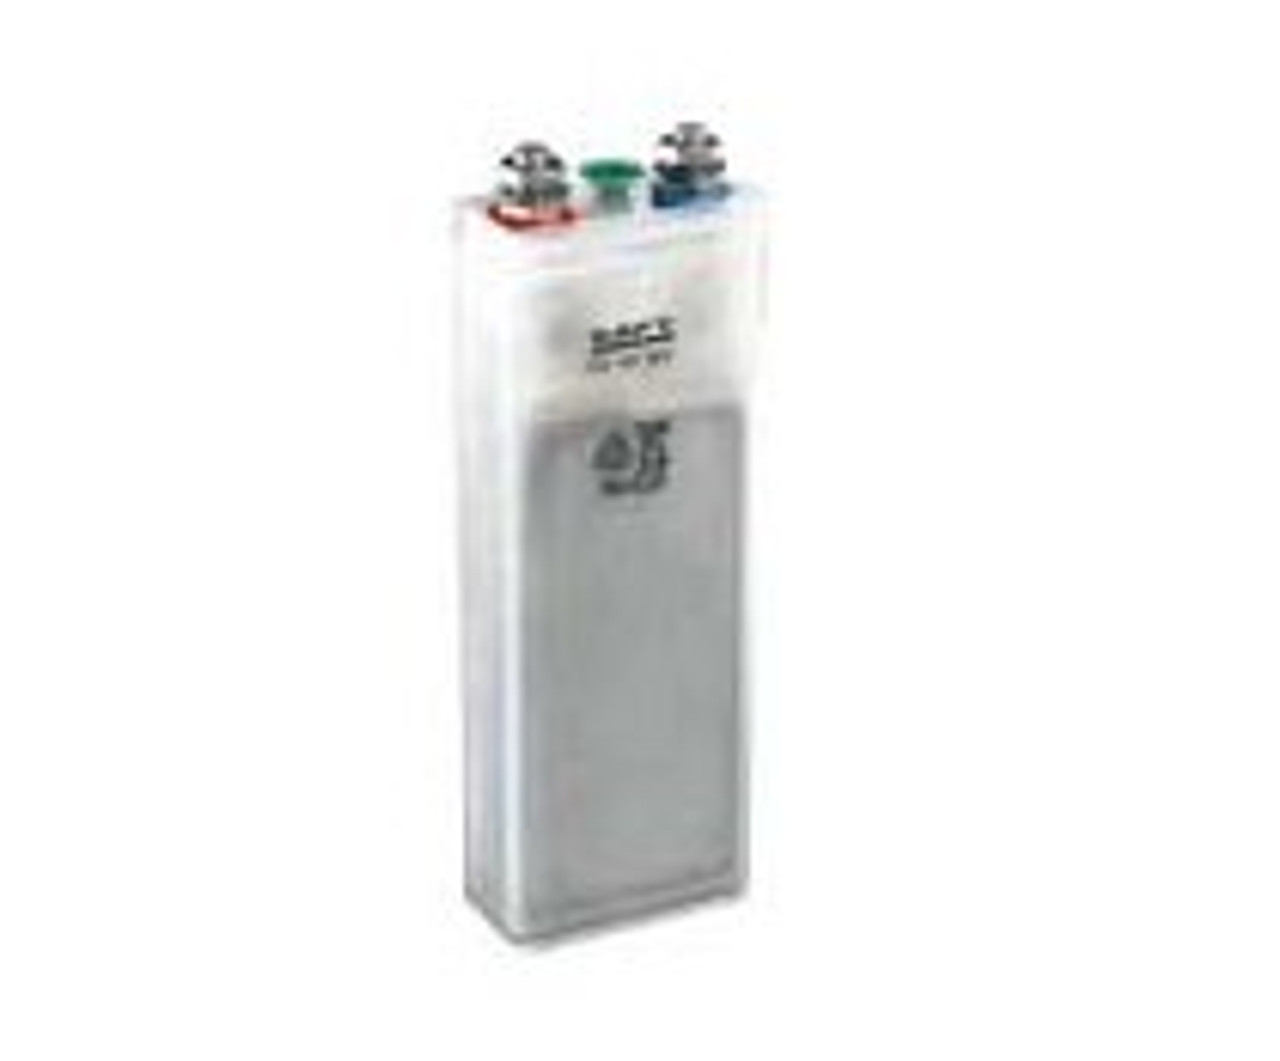 SAFT 162366 Nicad Battery Temperature Sensor at